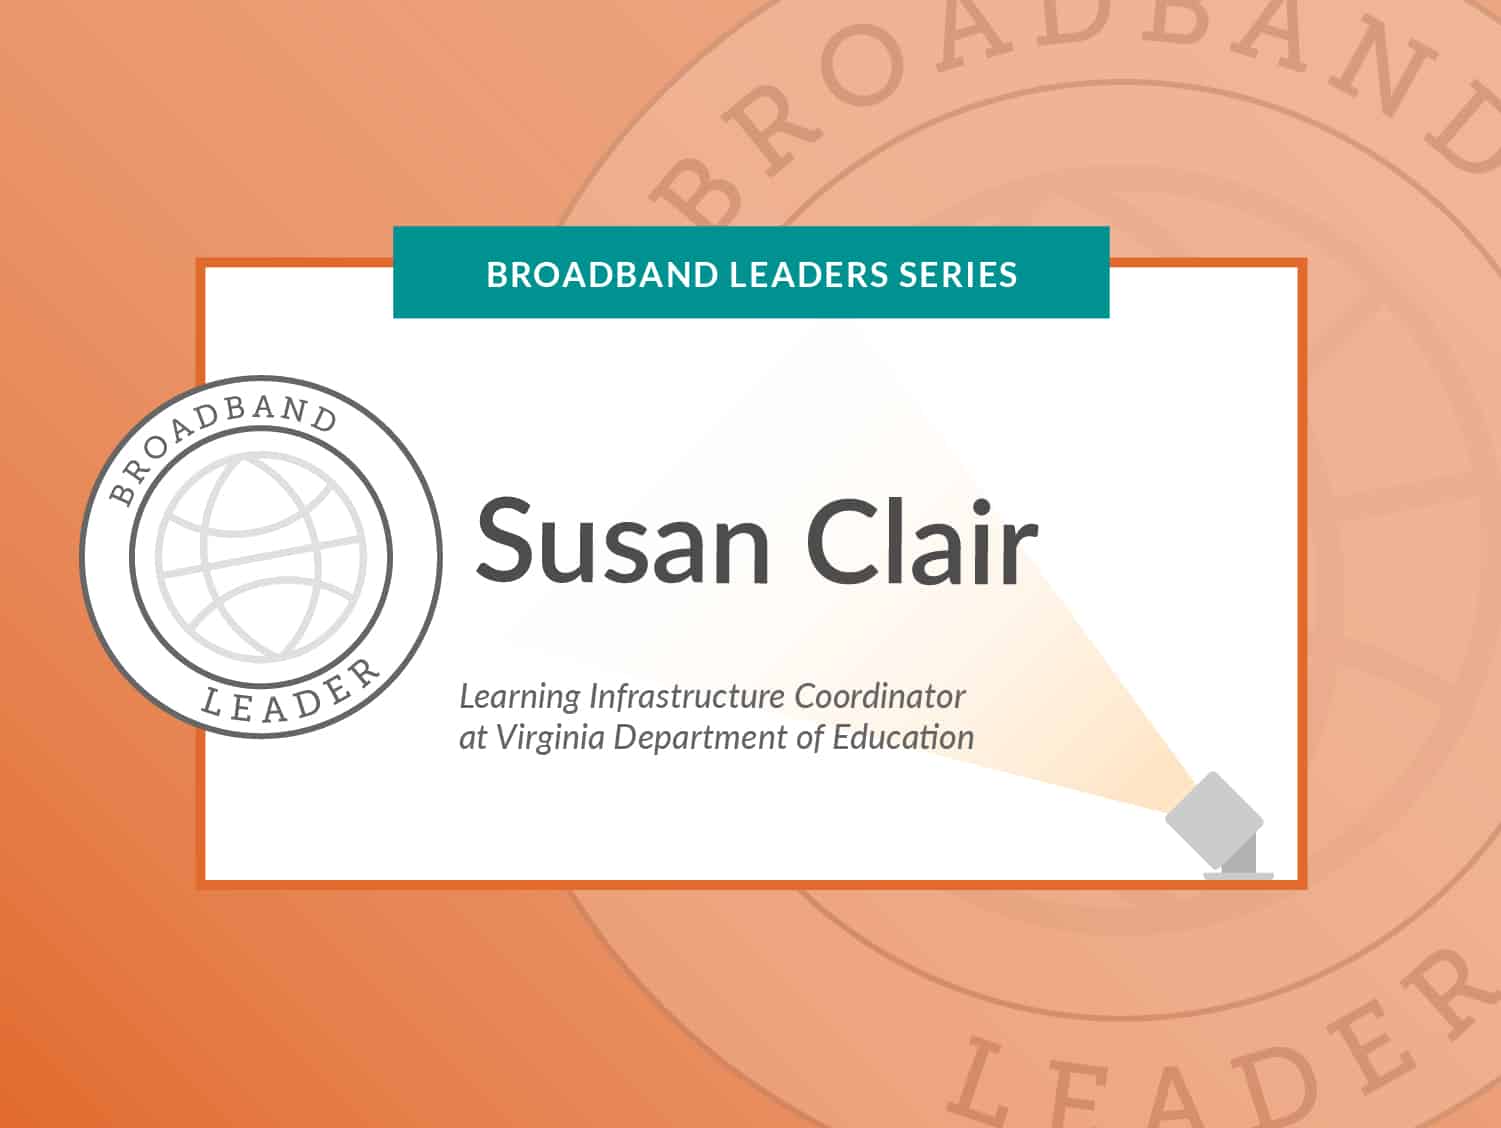 Broadband Leaders Series, Susan Clair, Learning Infrastructure Coordinator at Virginia Department of Education